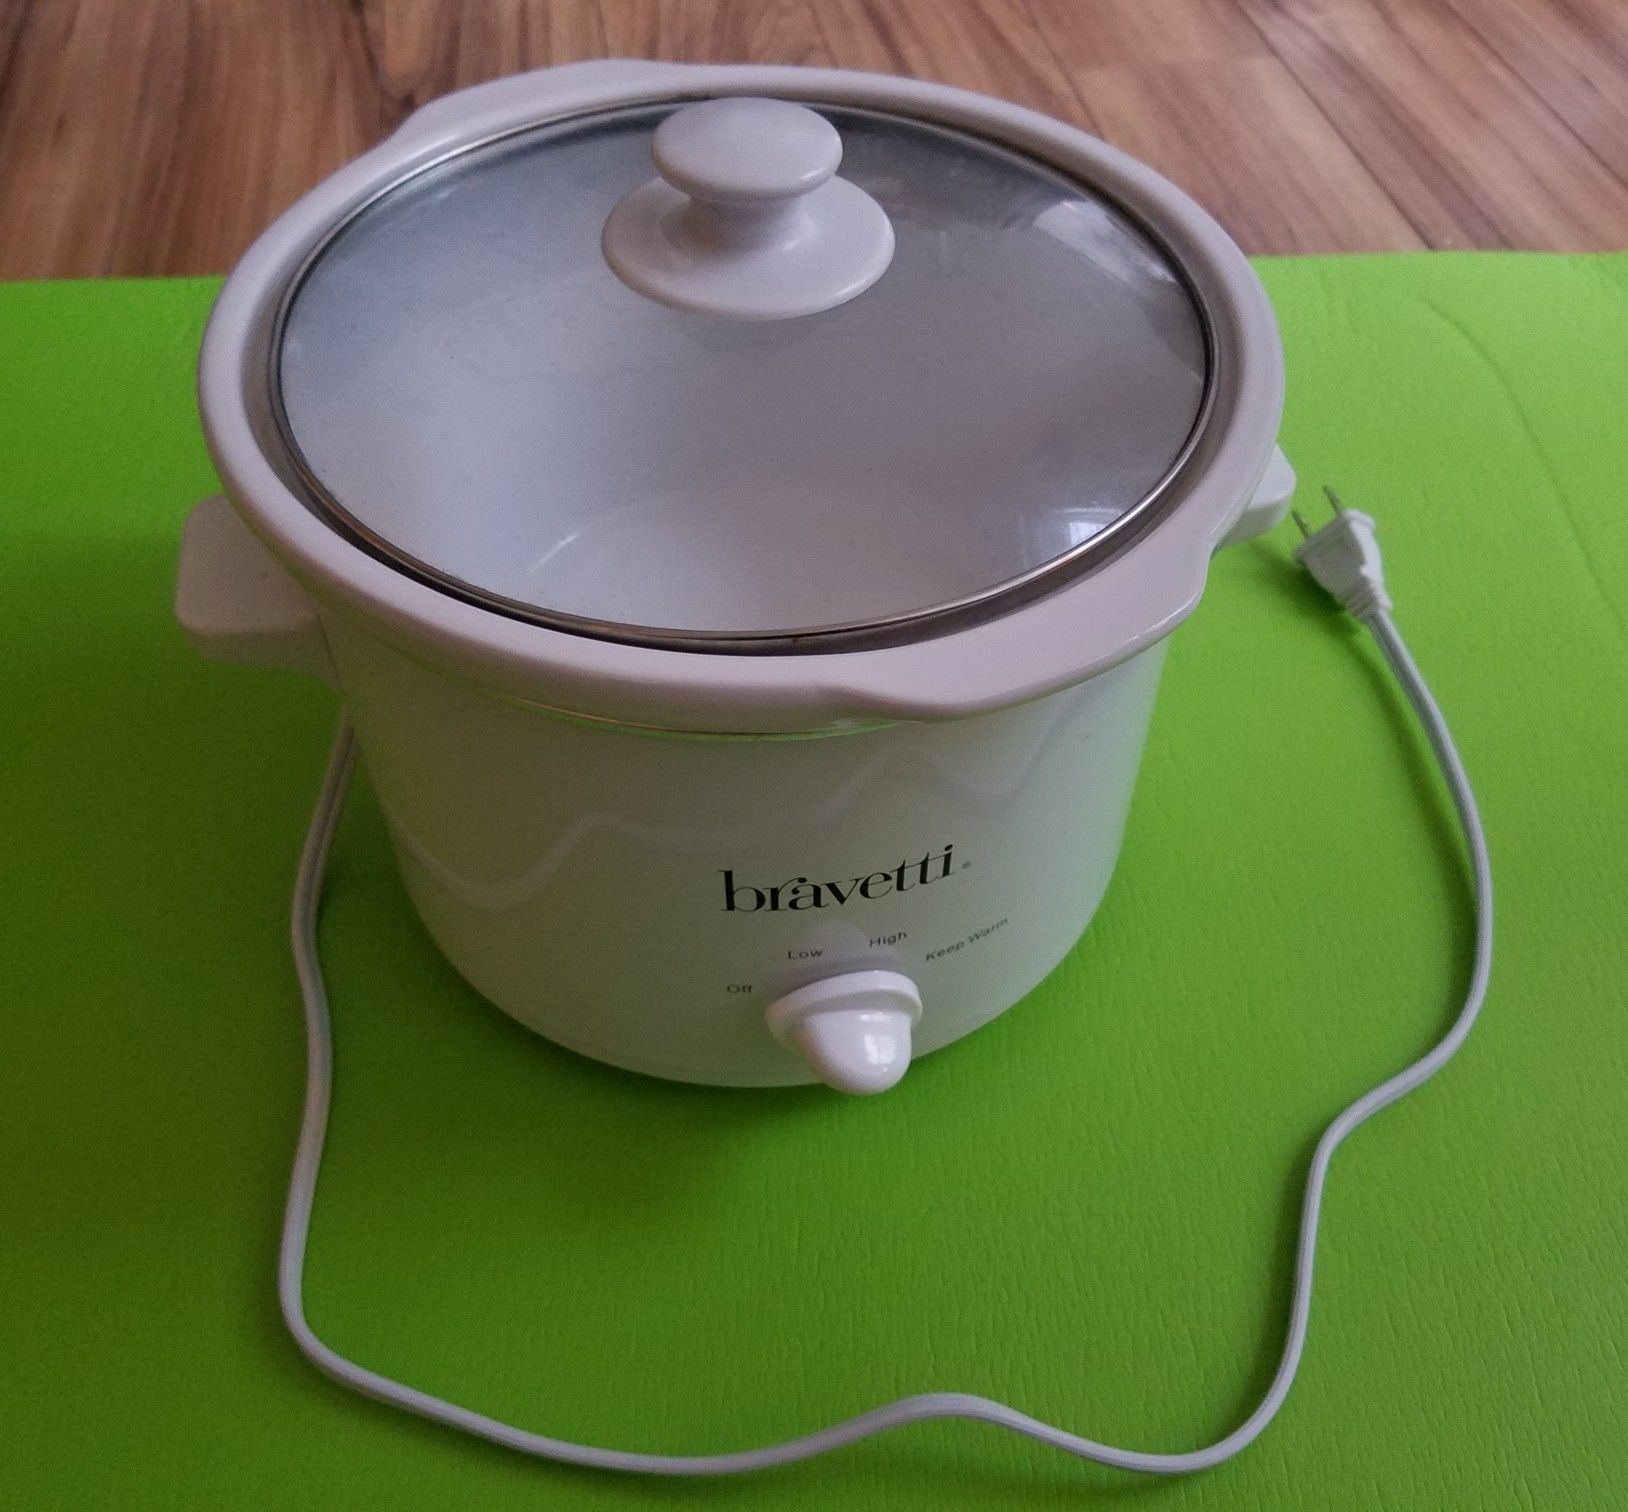 Bravetti white slow cooker / crockpot